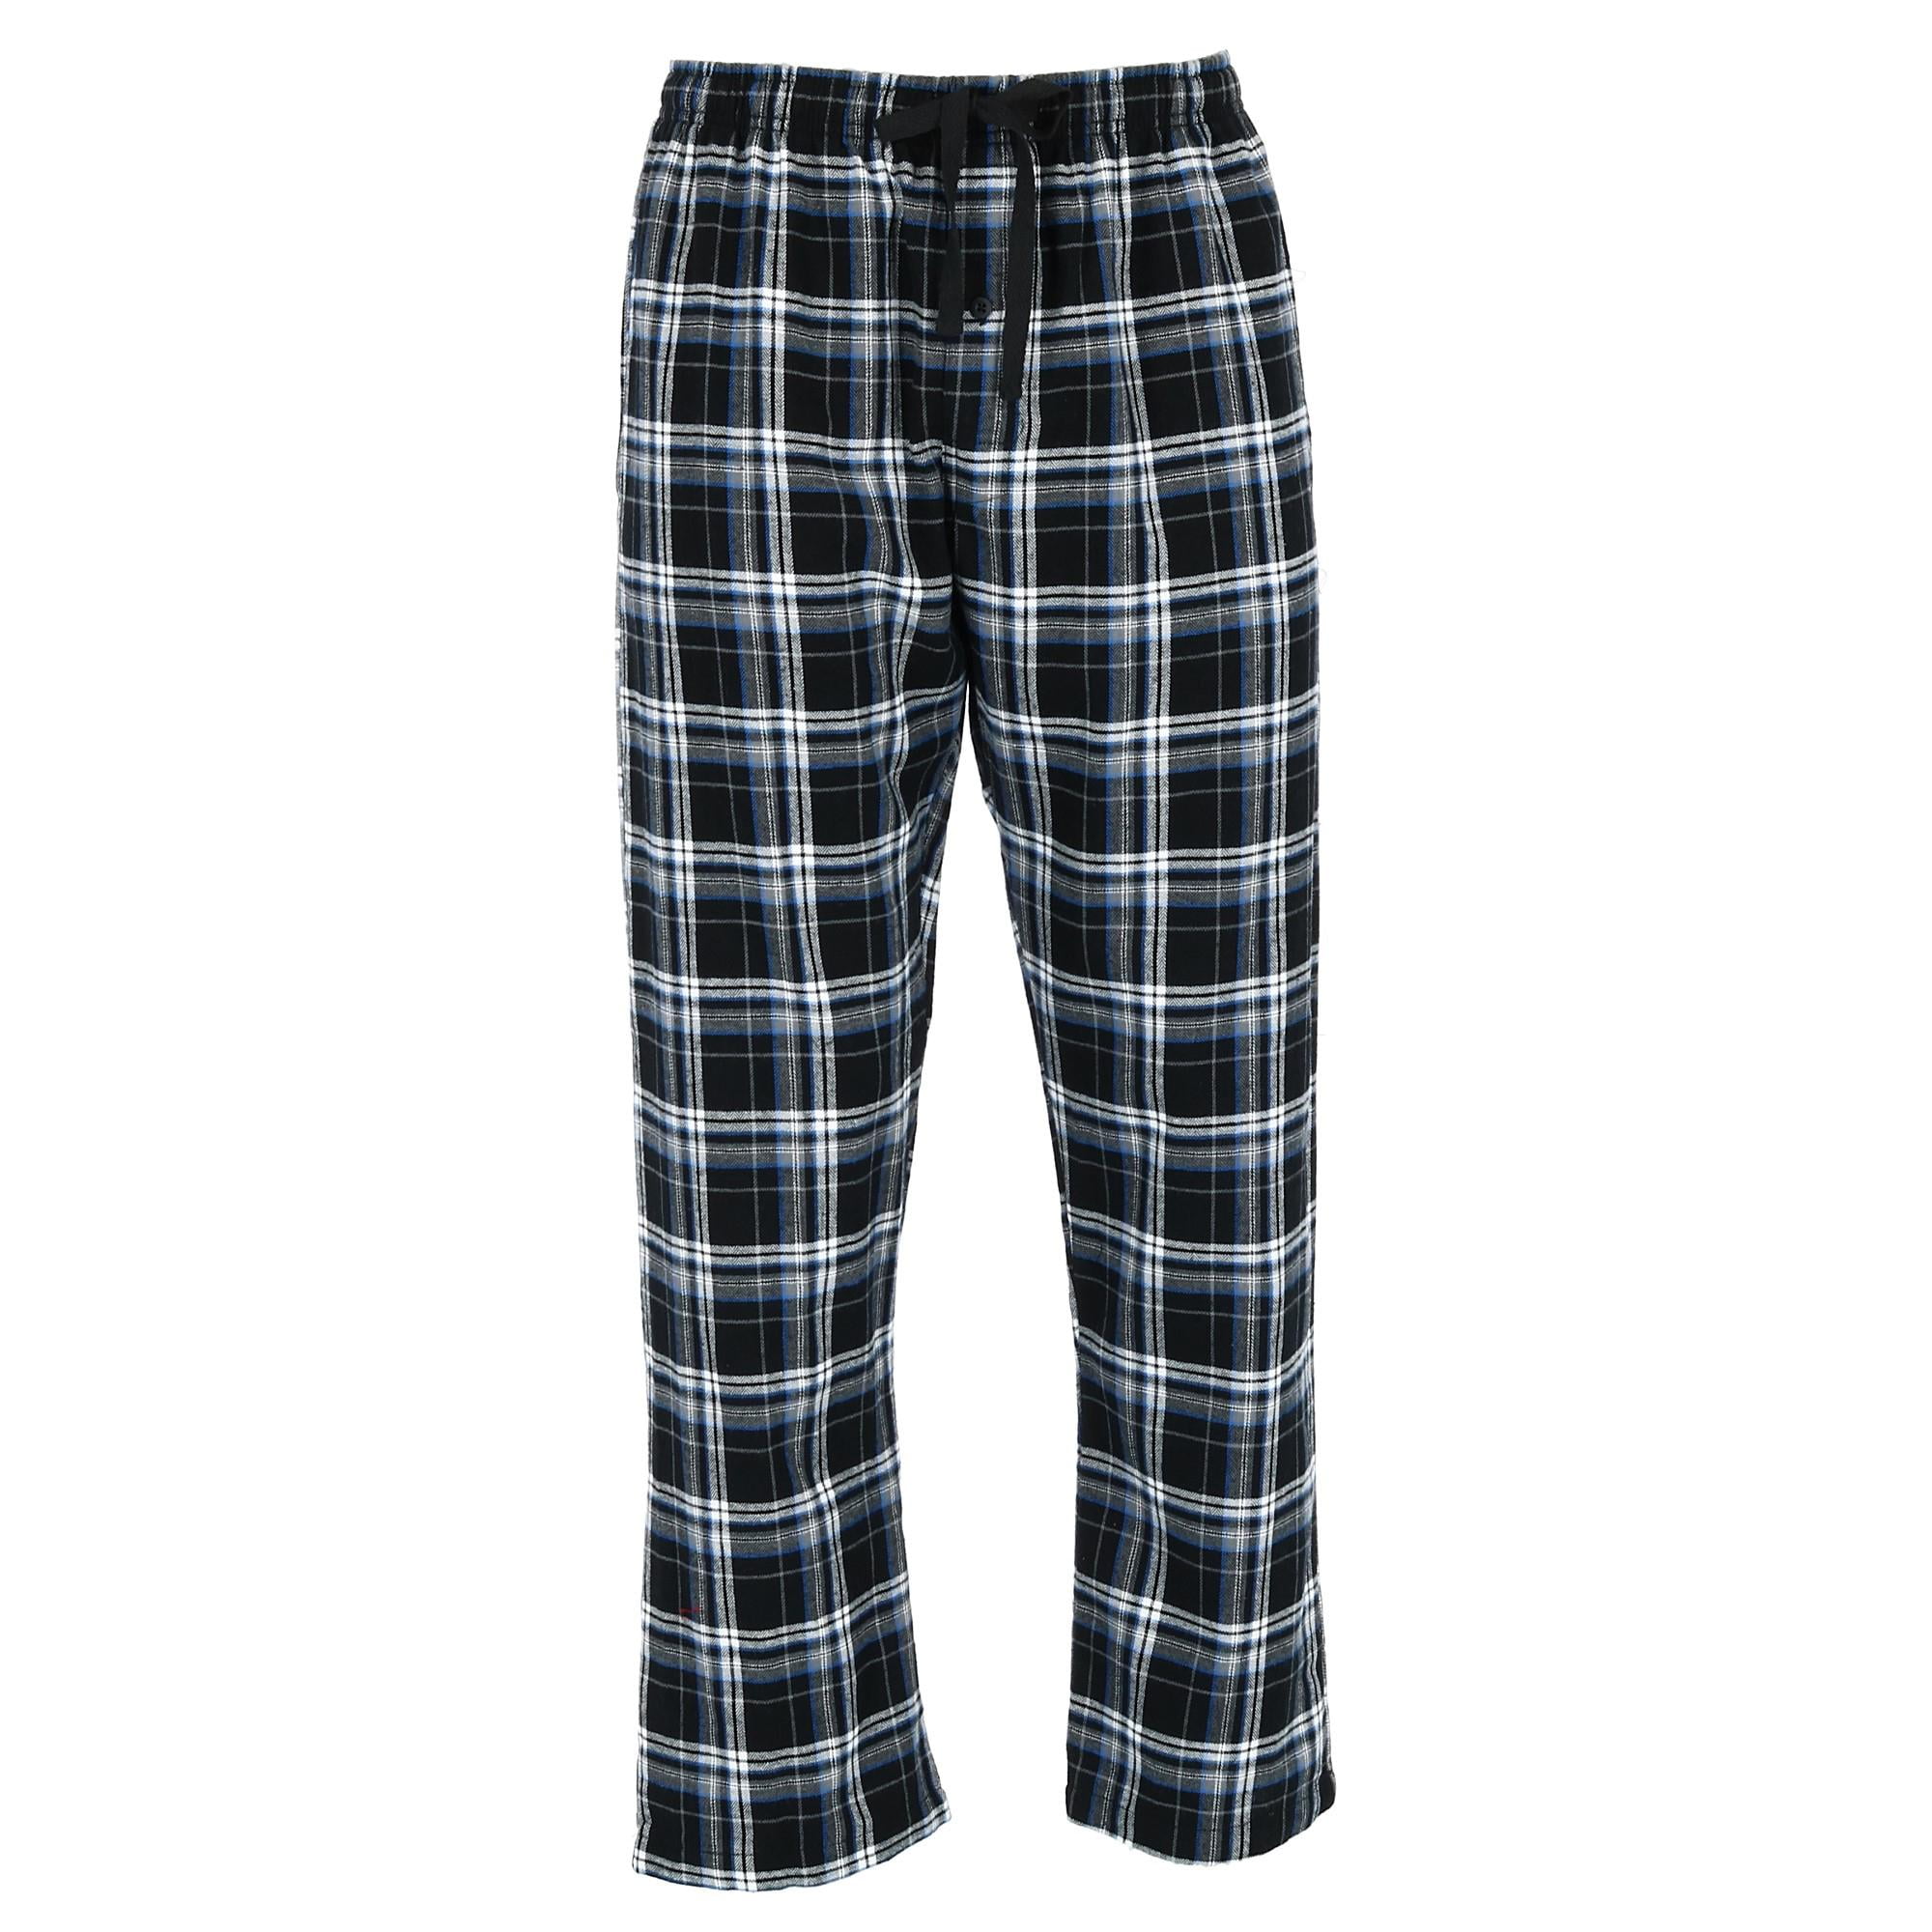 Hanes Men's Big and Tall Flannel Lounge Pajama Pants | Walmart Canada